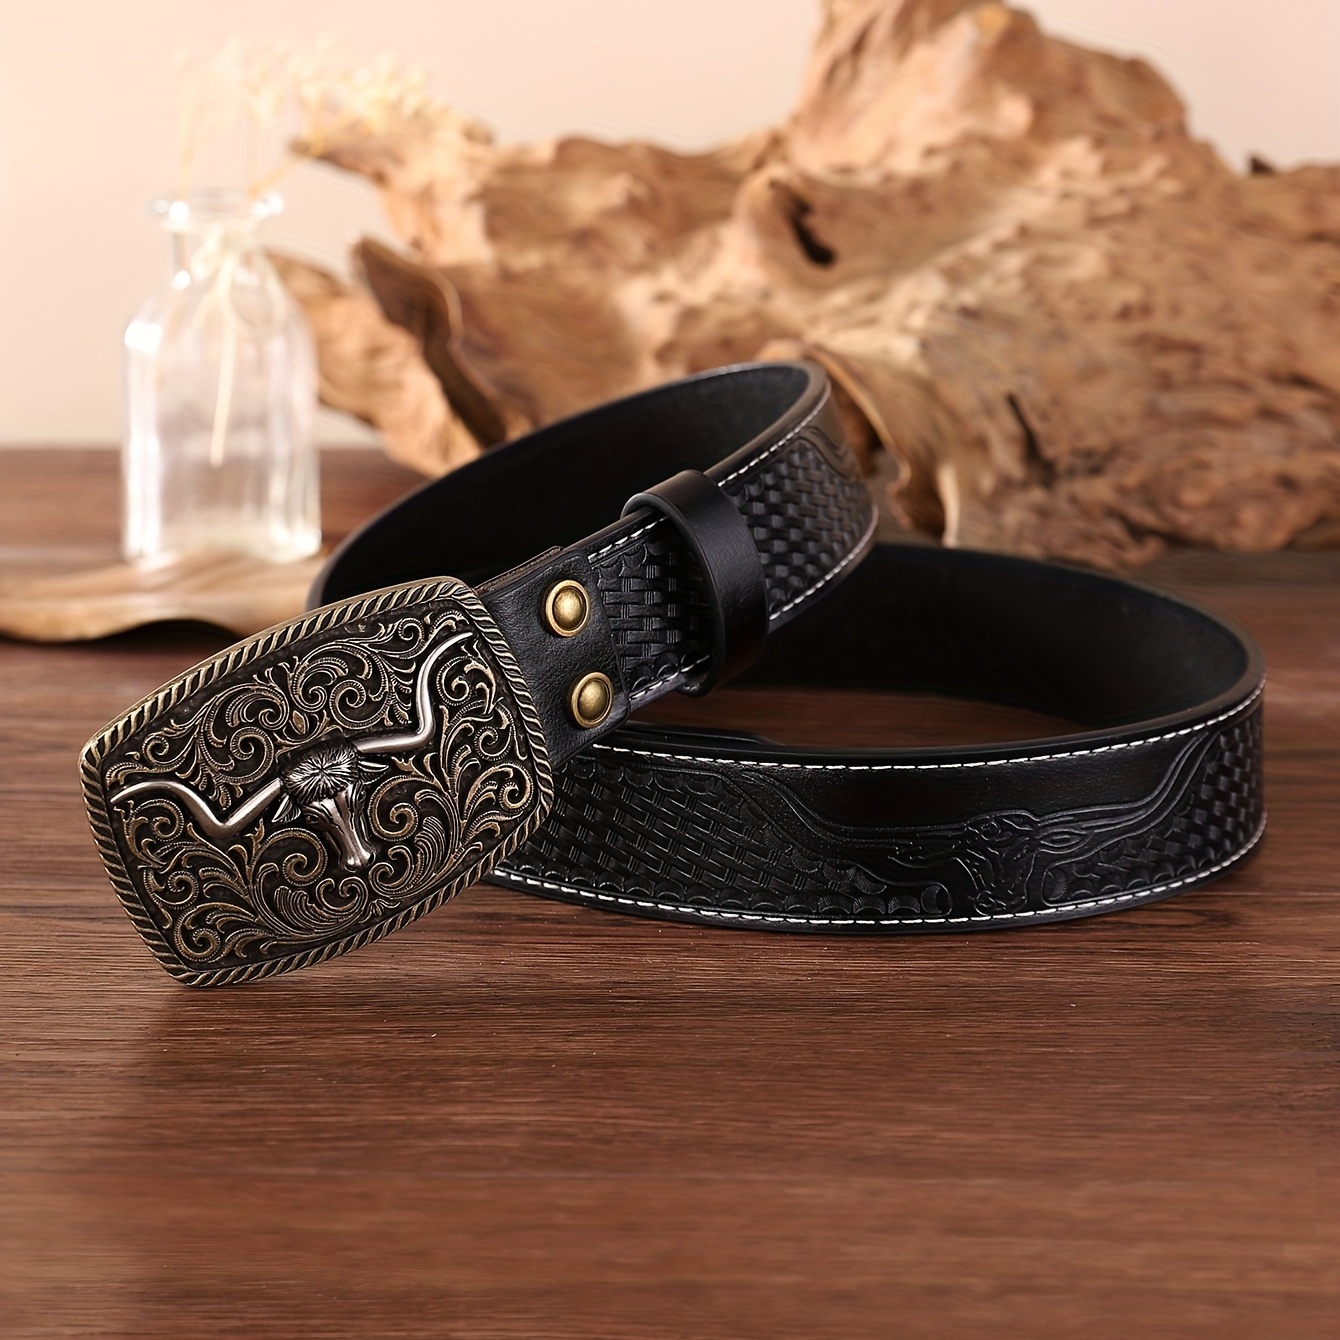 Men's Western Cowboy Leather Belt